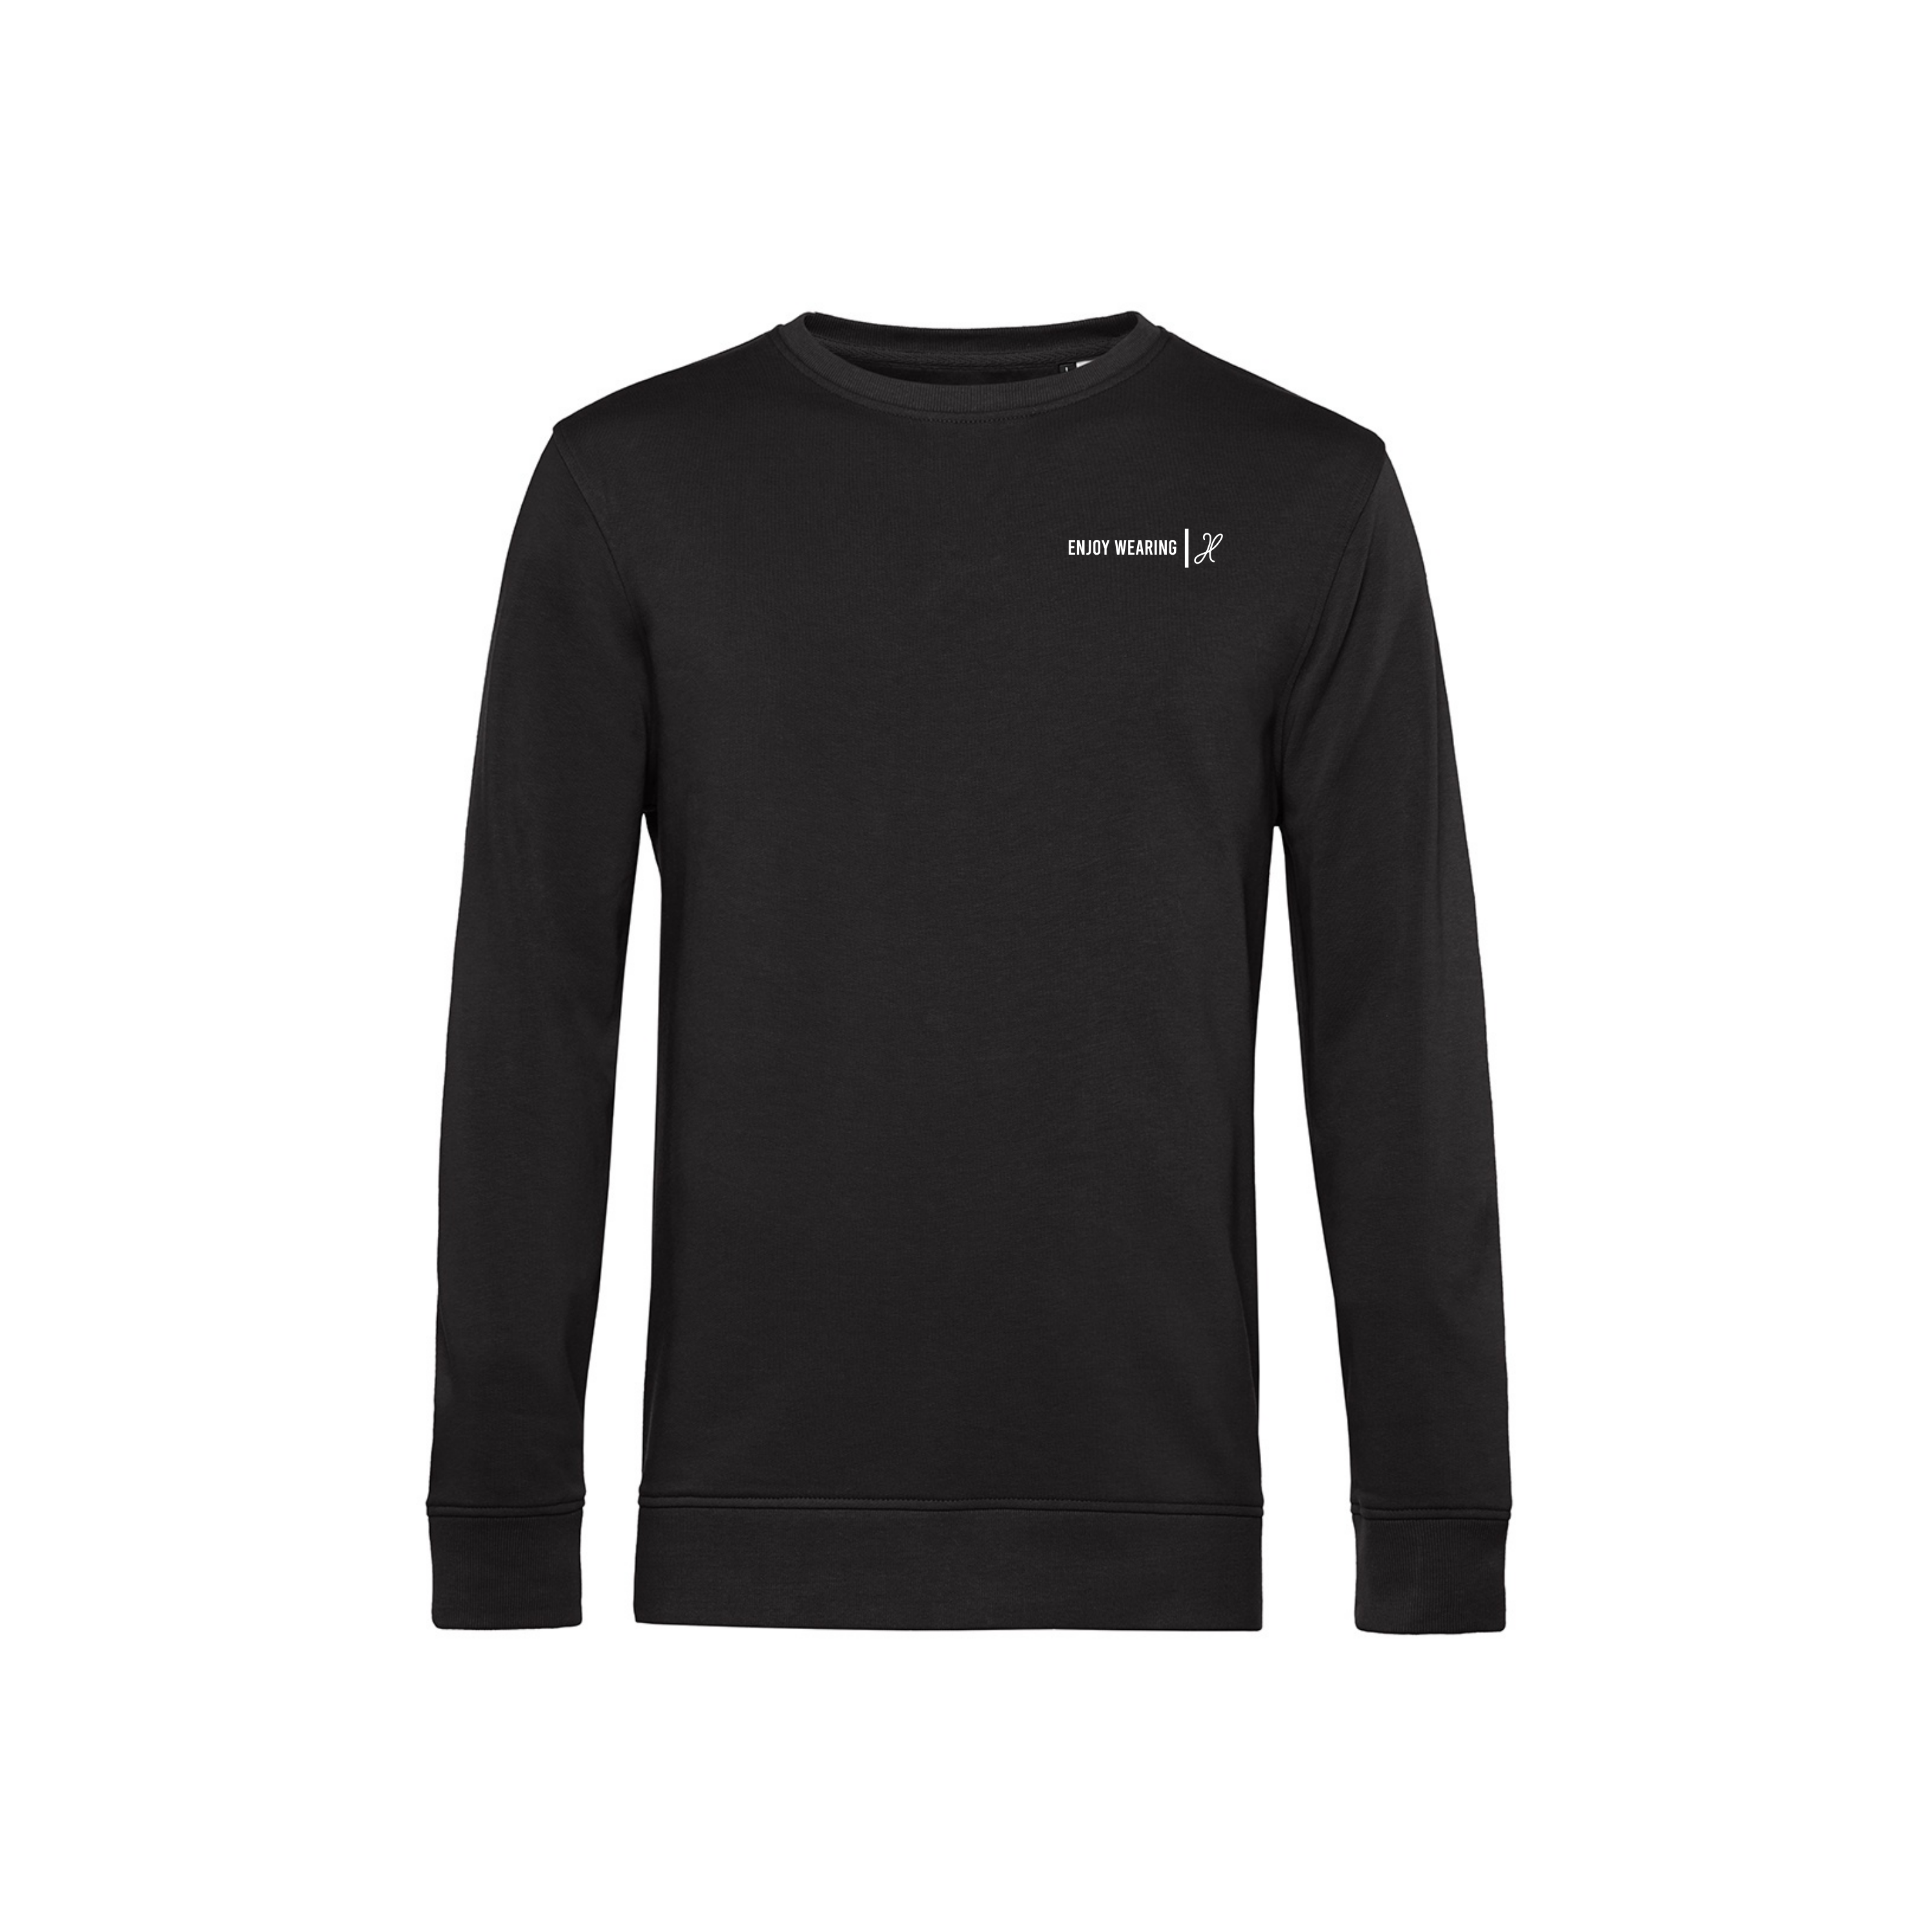 Havalter Sweater Black Enjoy Wearing PT2, Unisex